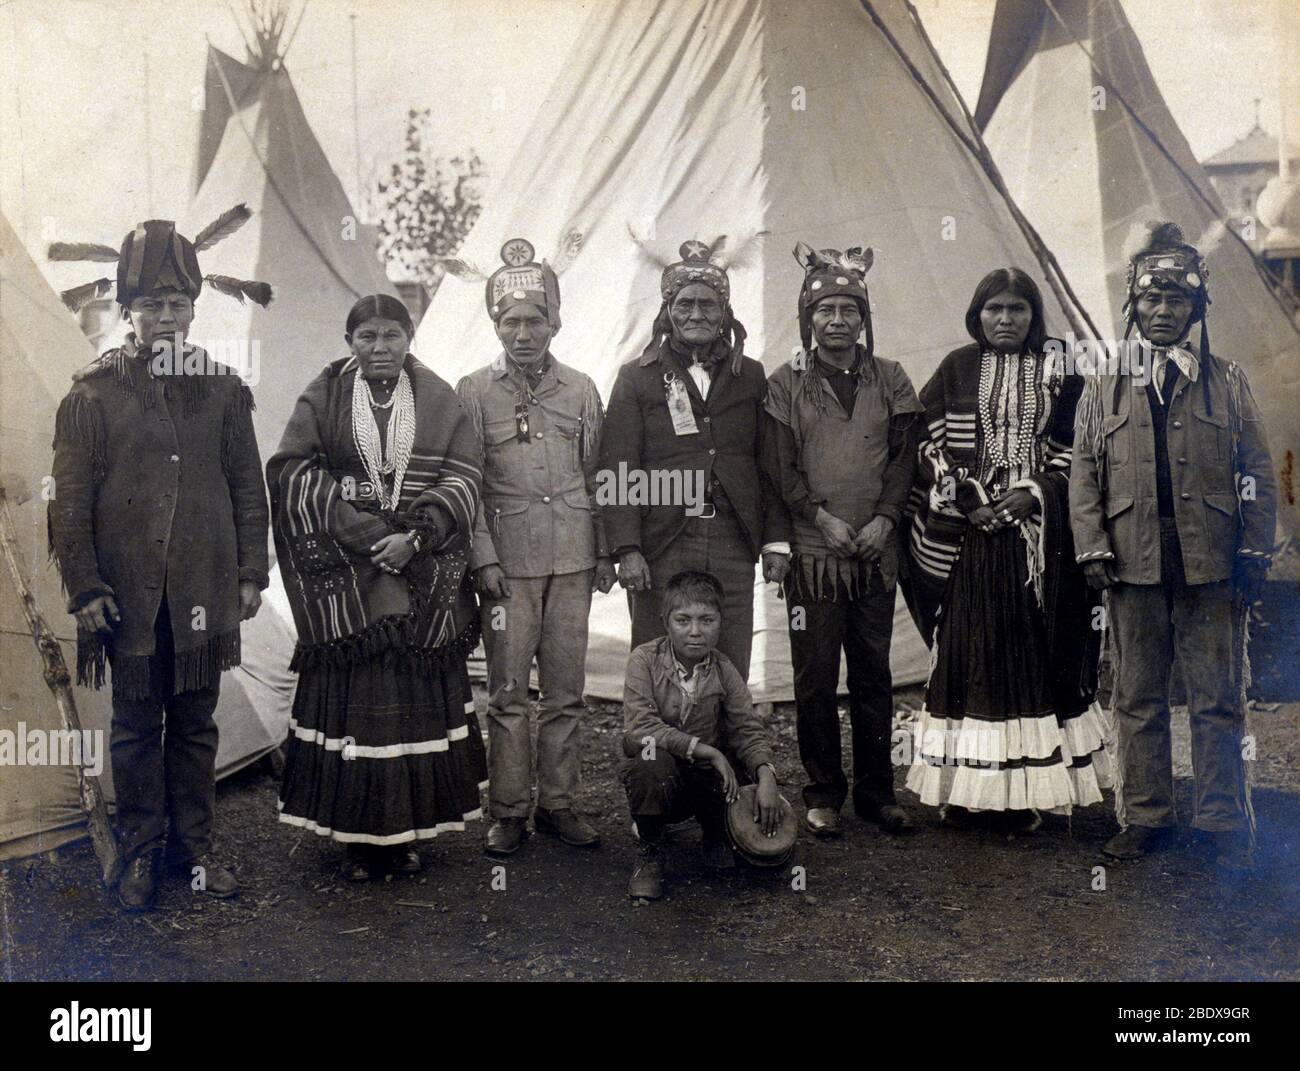 Louisiana Purchase Expo, Geronimo with Apaches, 1904 Stock Photo